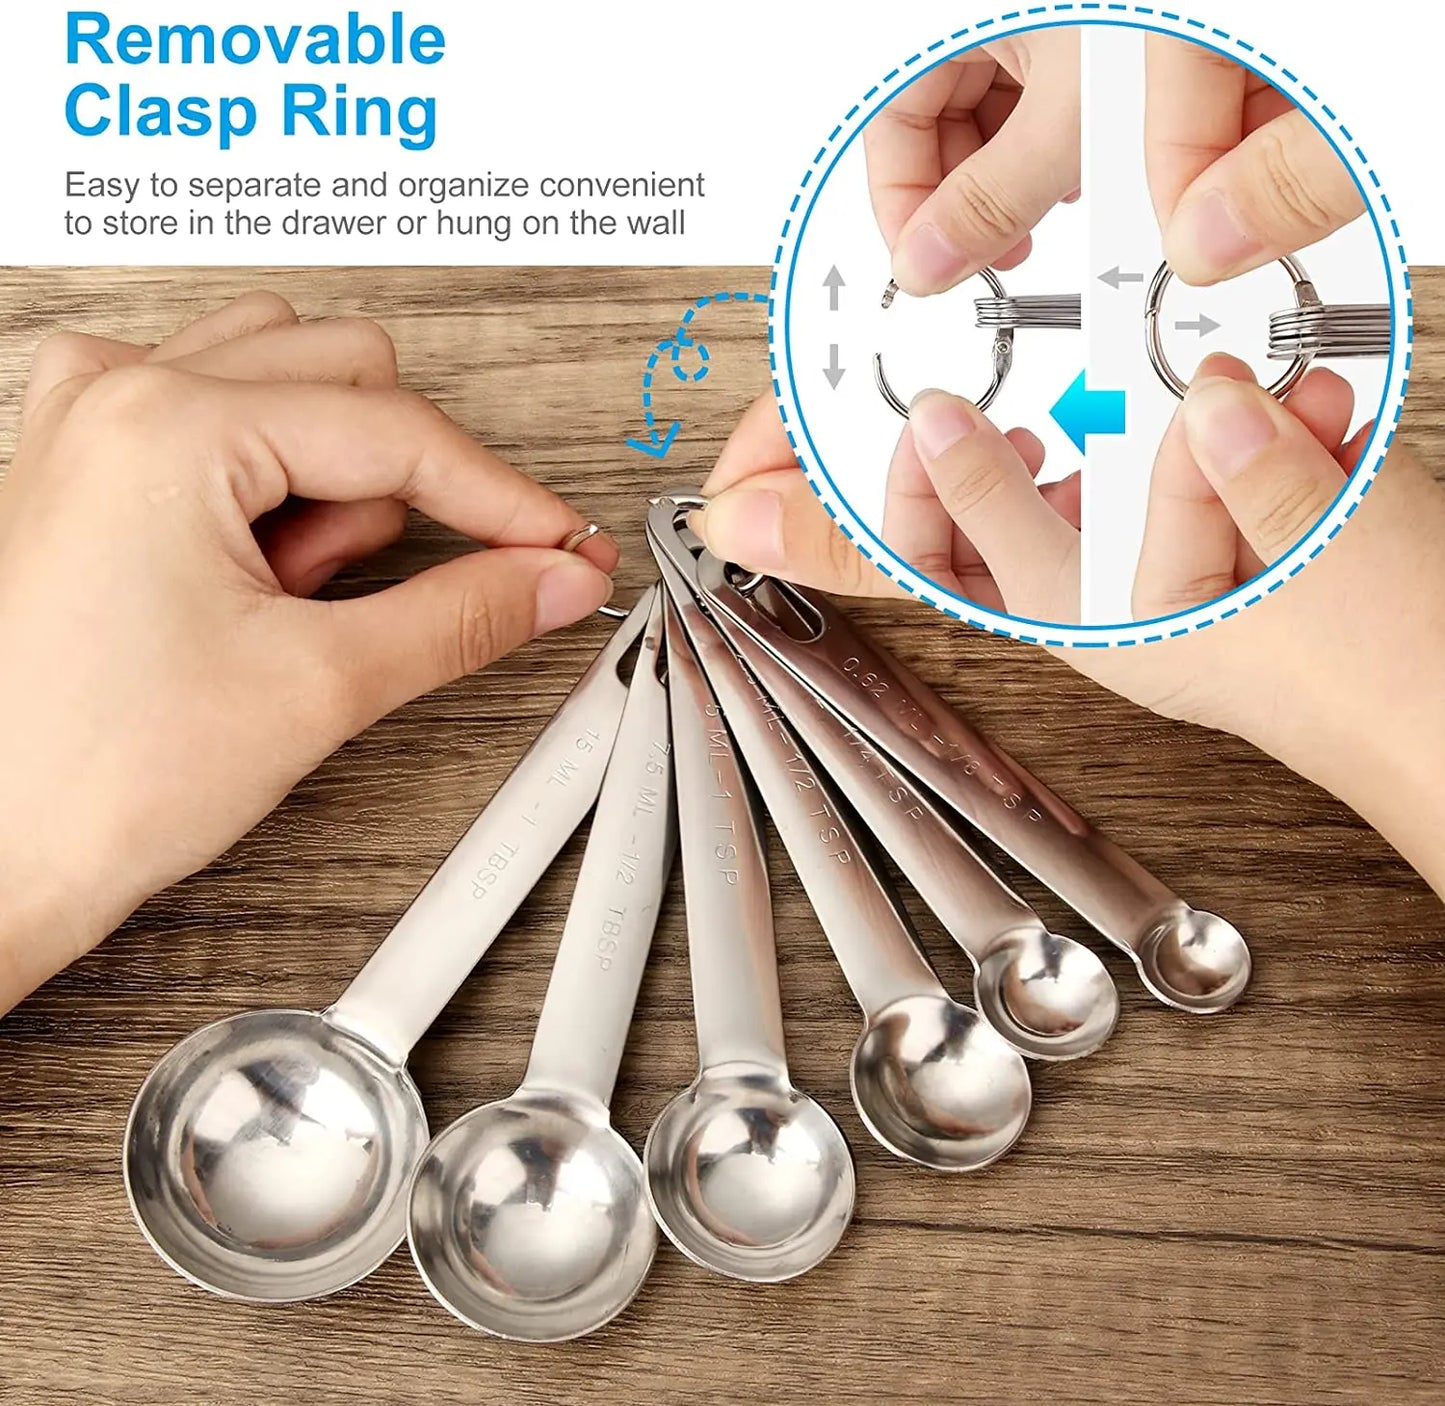 Stainless steel measuring spoons